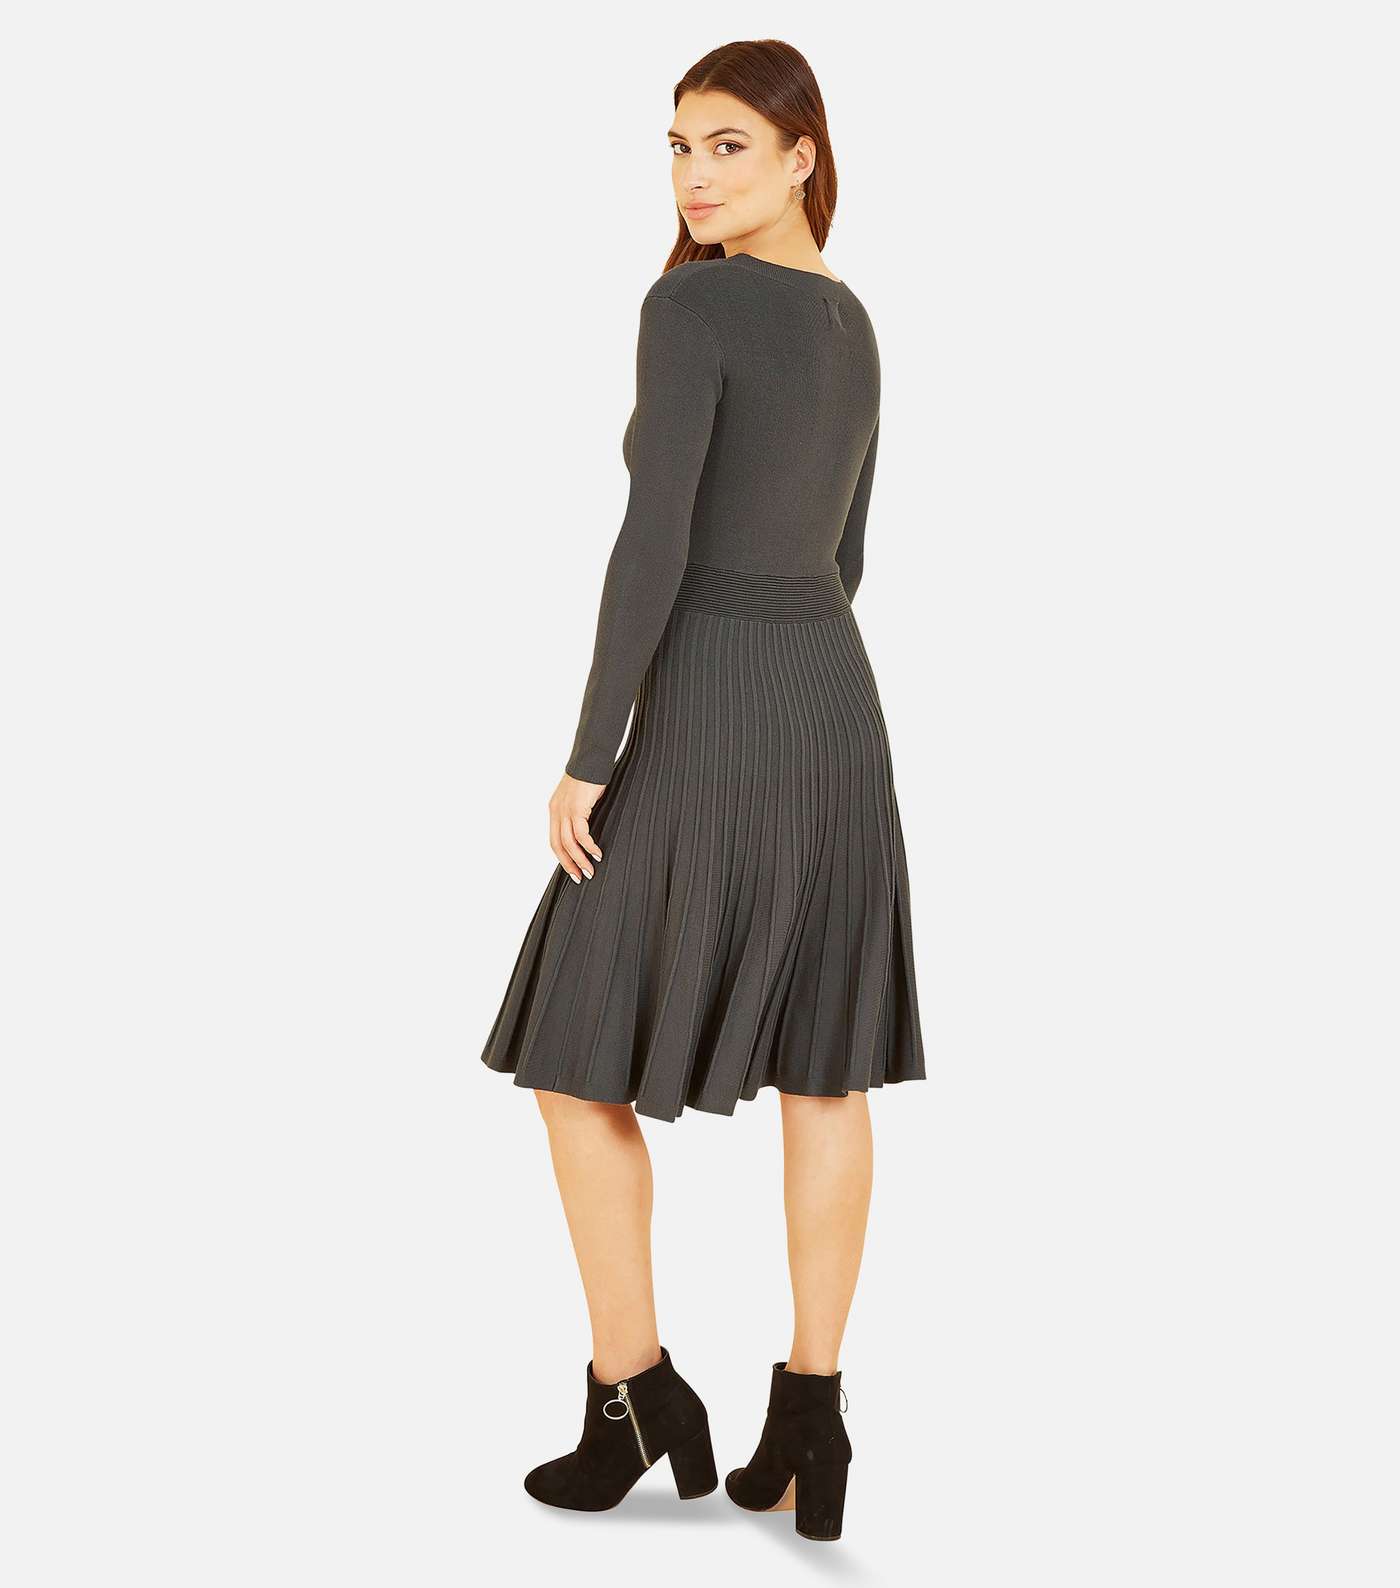 Yumi Dark Grey Knit Pleated Skater Dress Image 4